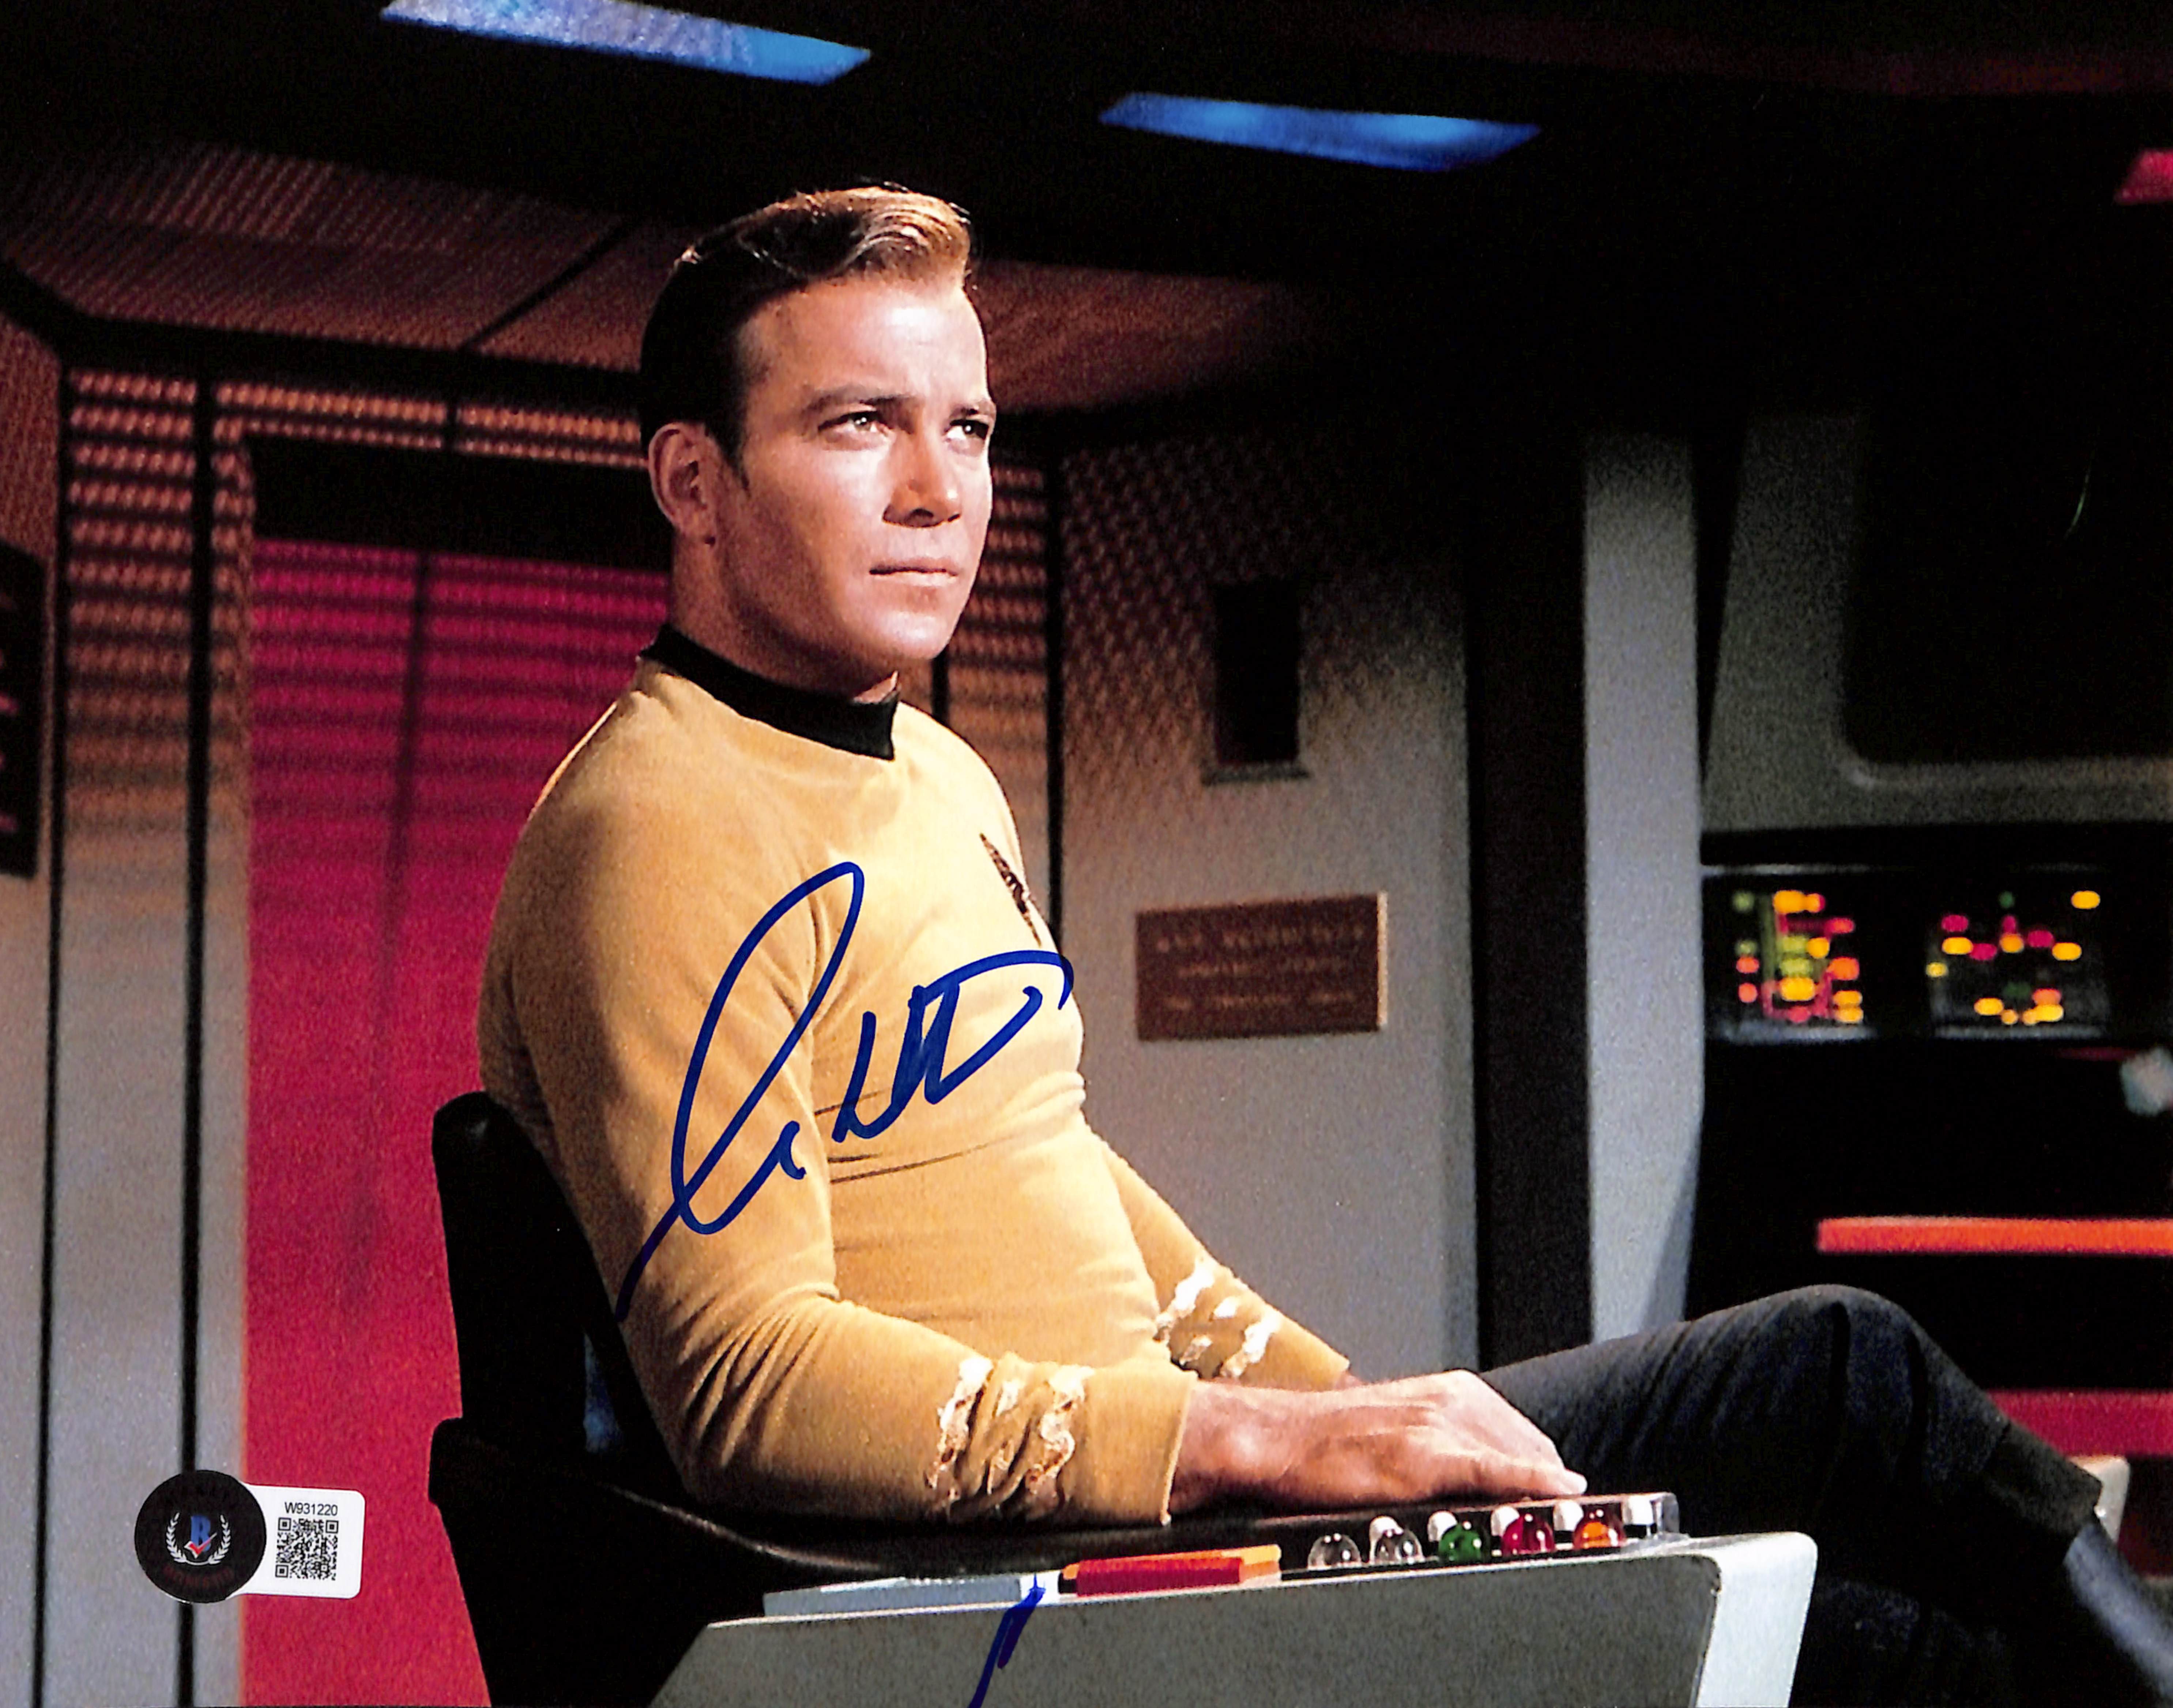 William Shatner Signed Star Trek 8x10 Photo Beckett 44525